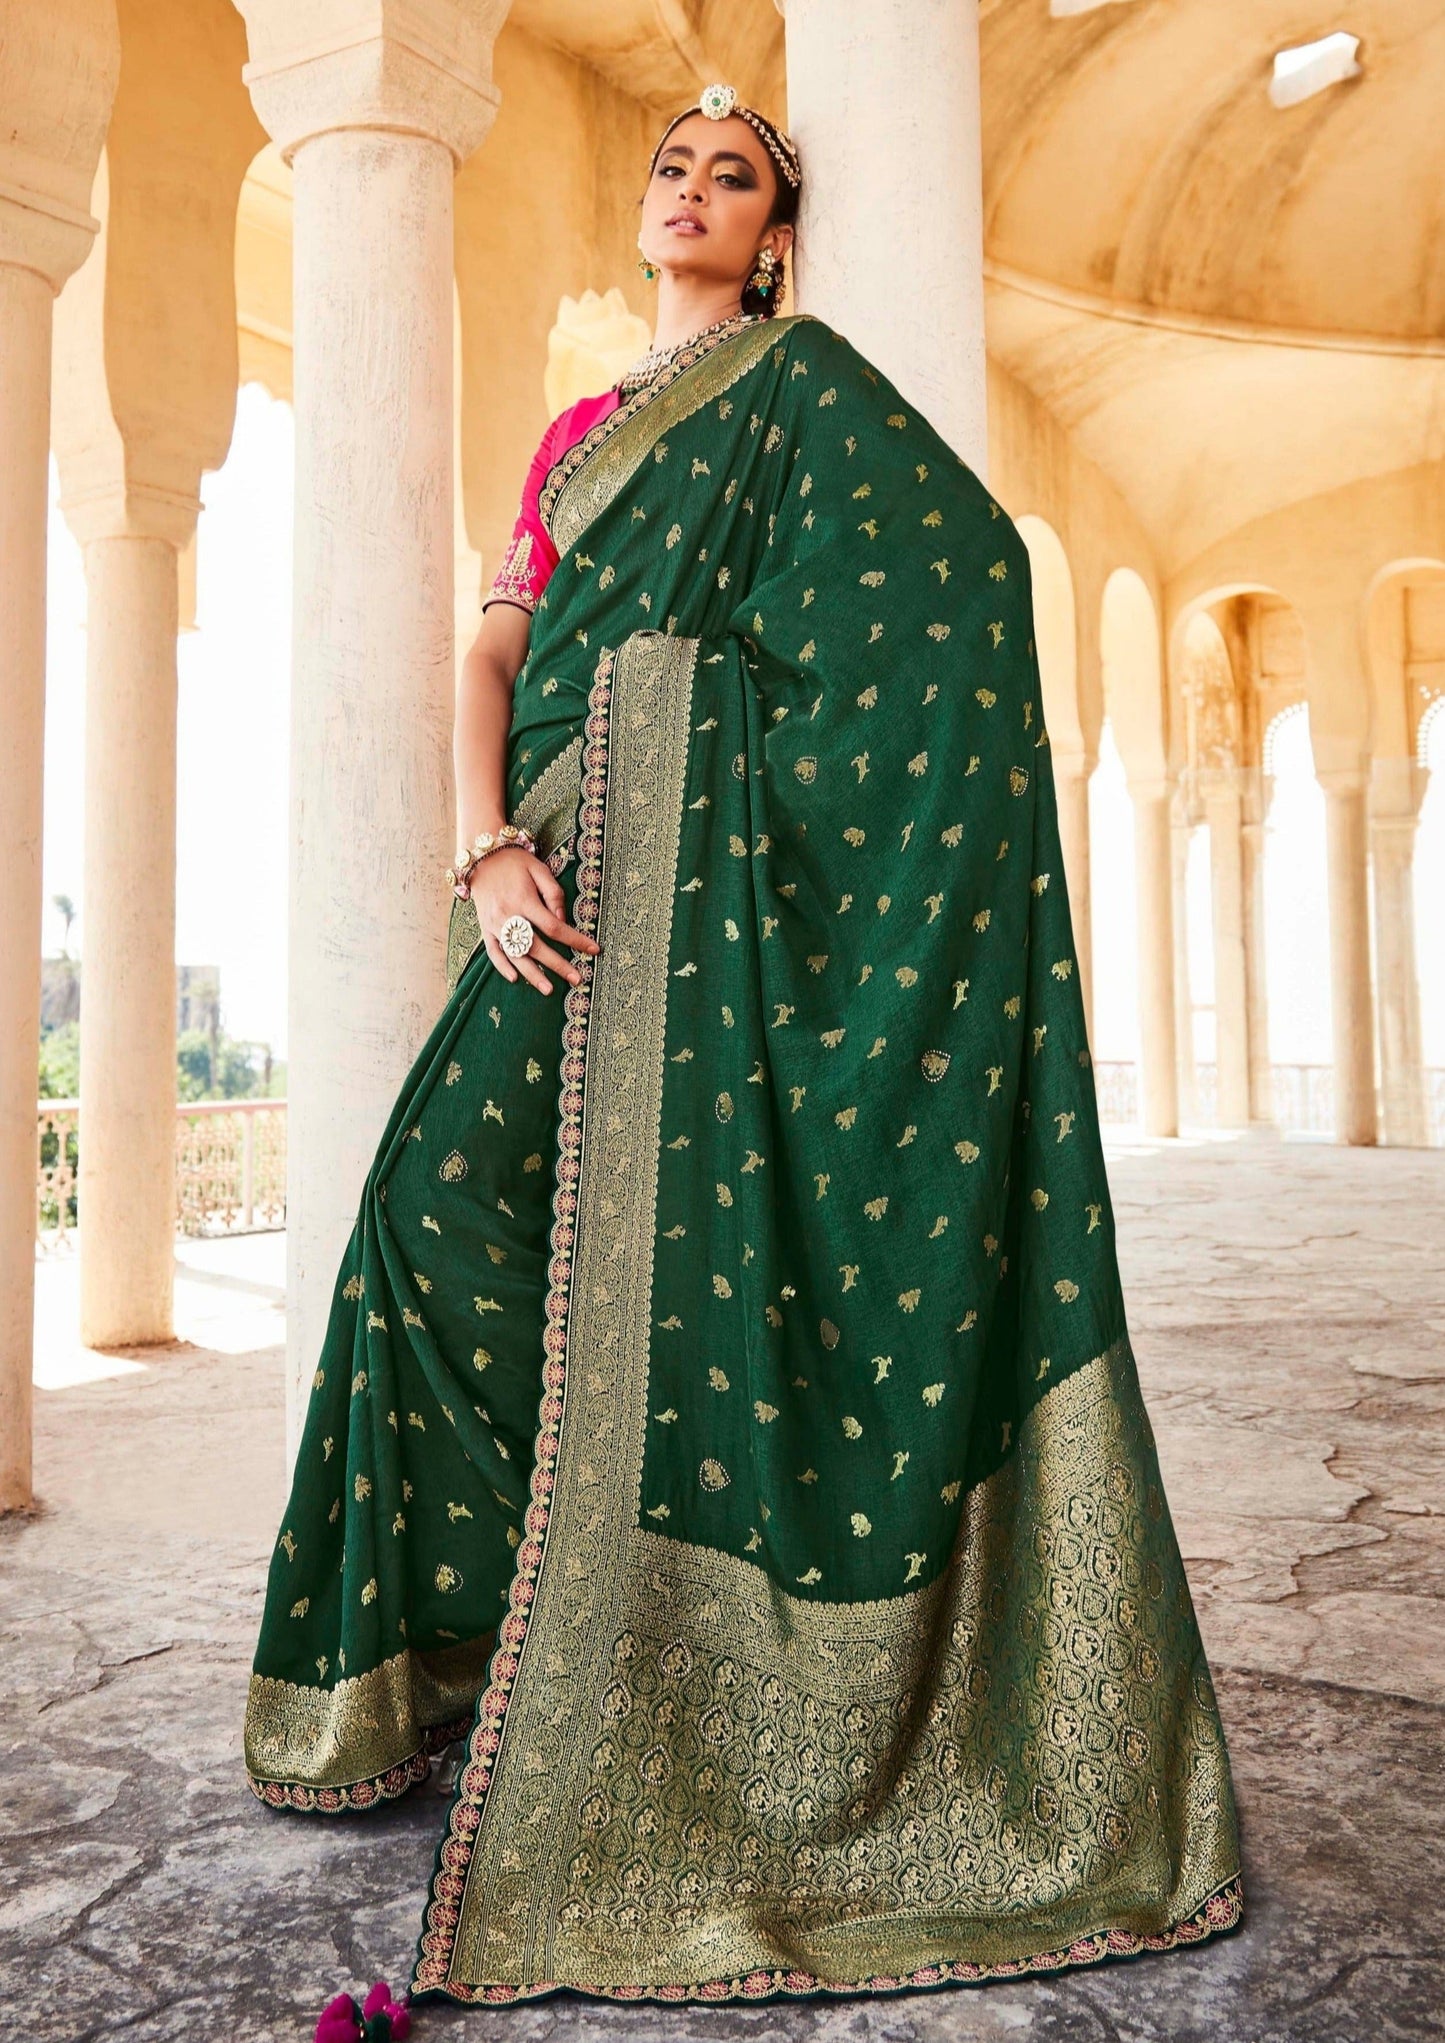 Luxury handloom sarees